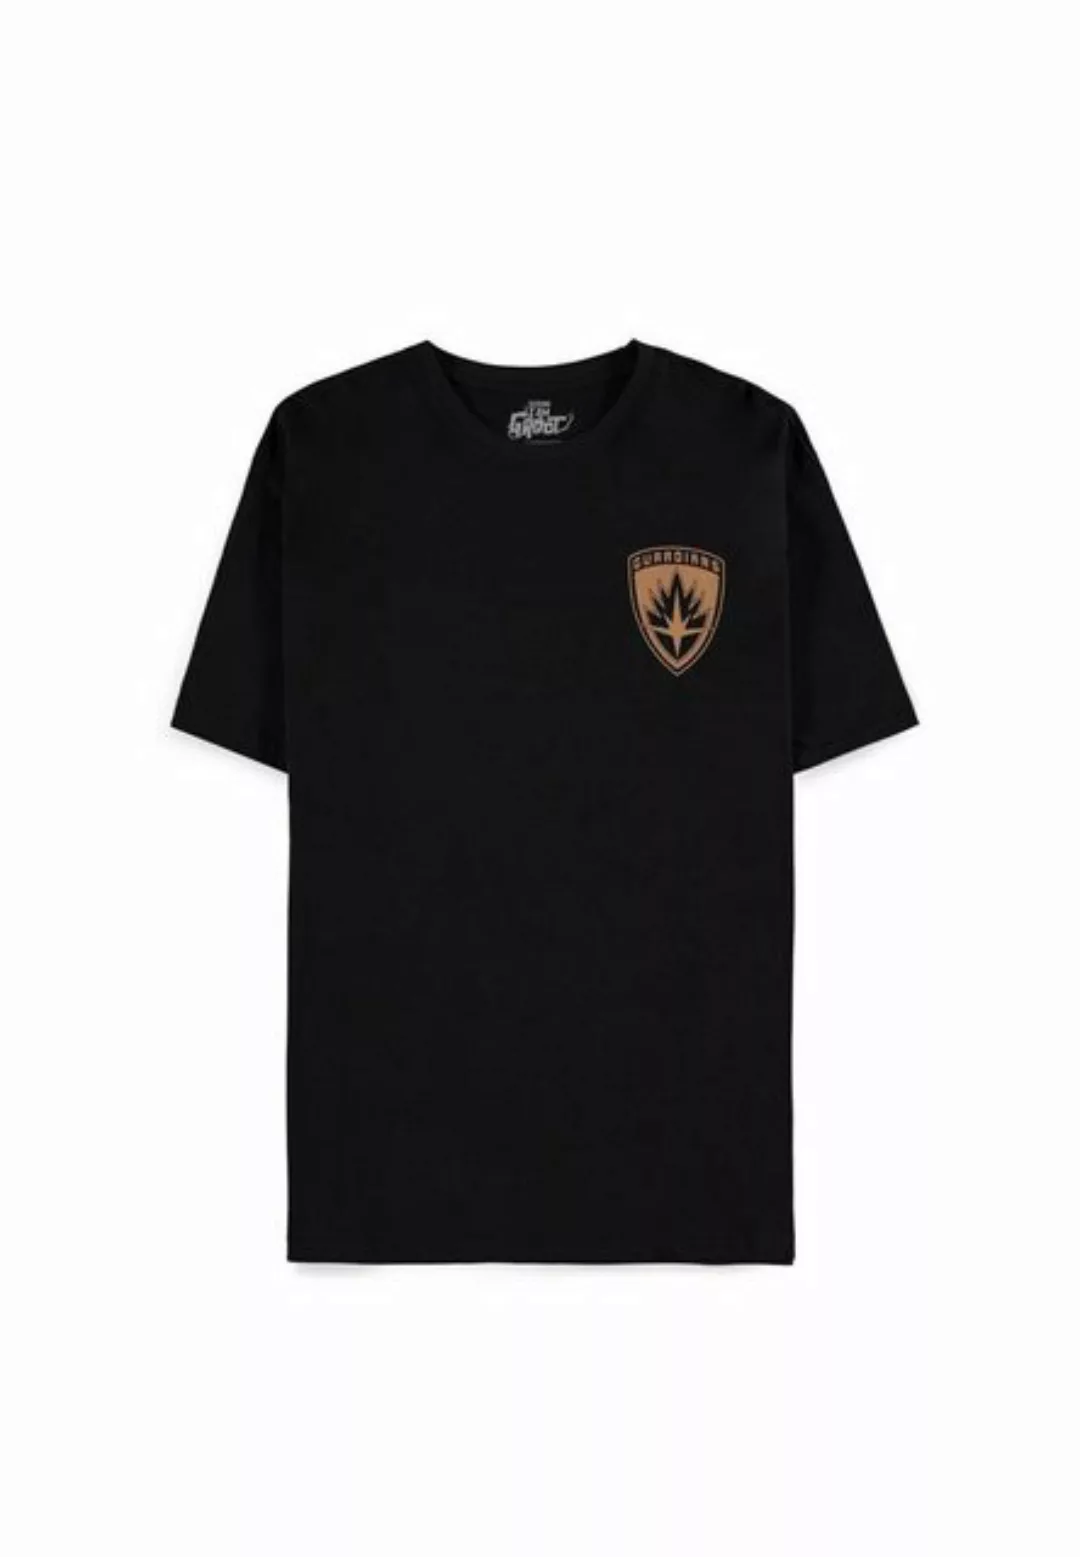 Guardians Of The Galaxy T-Shirt günstig online kaufen